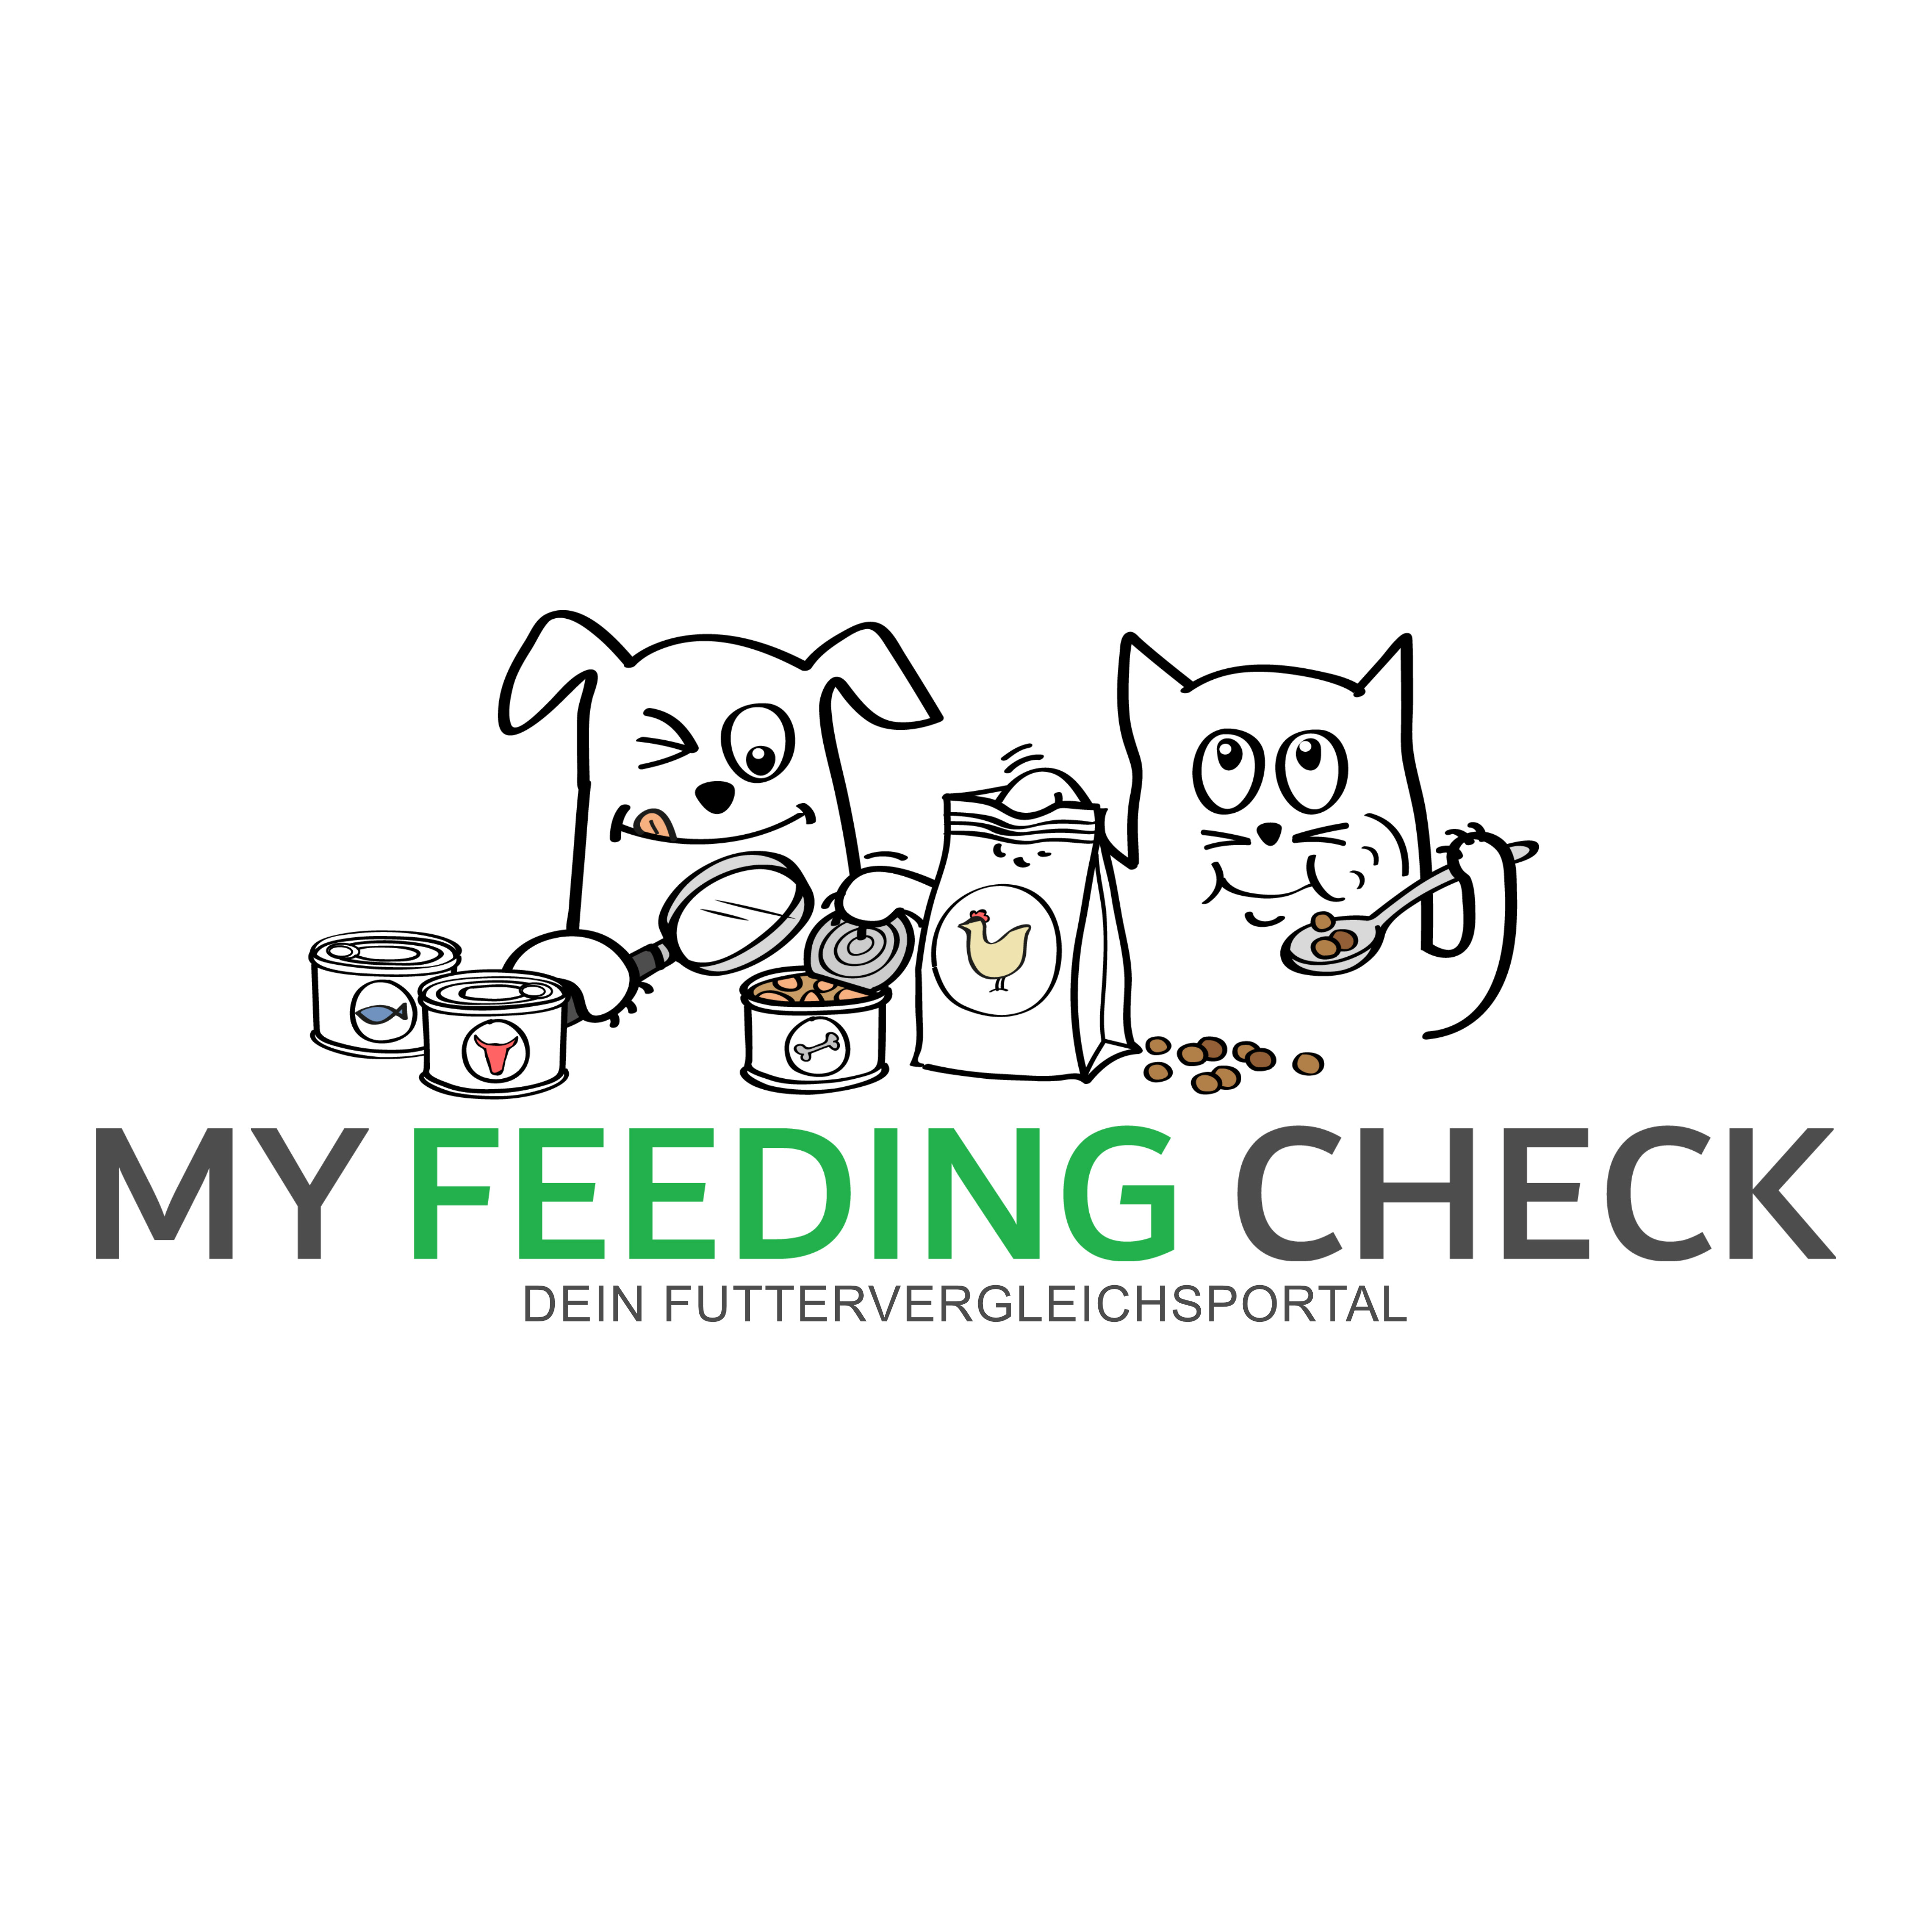 (c) Myfeedingcheck.com